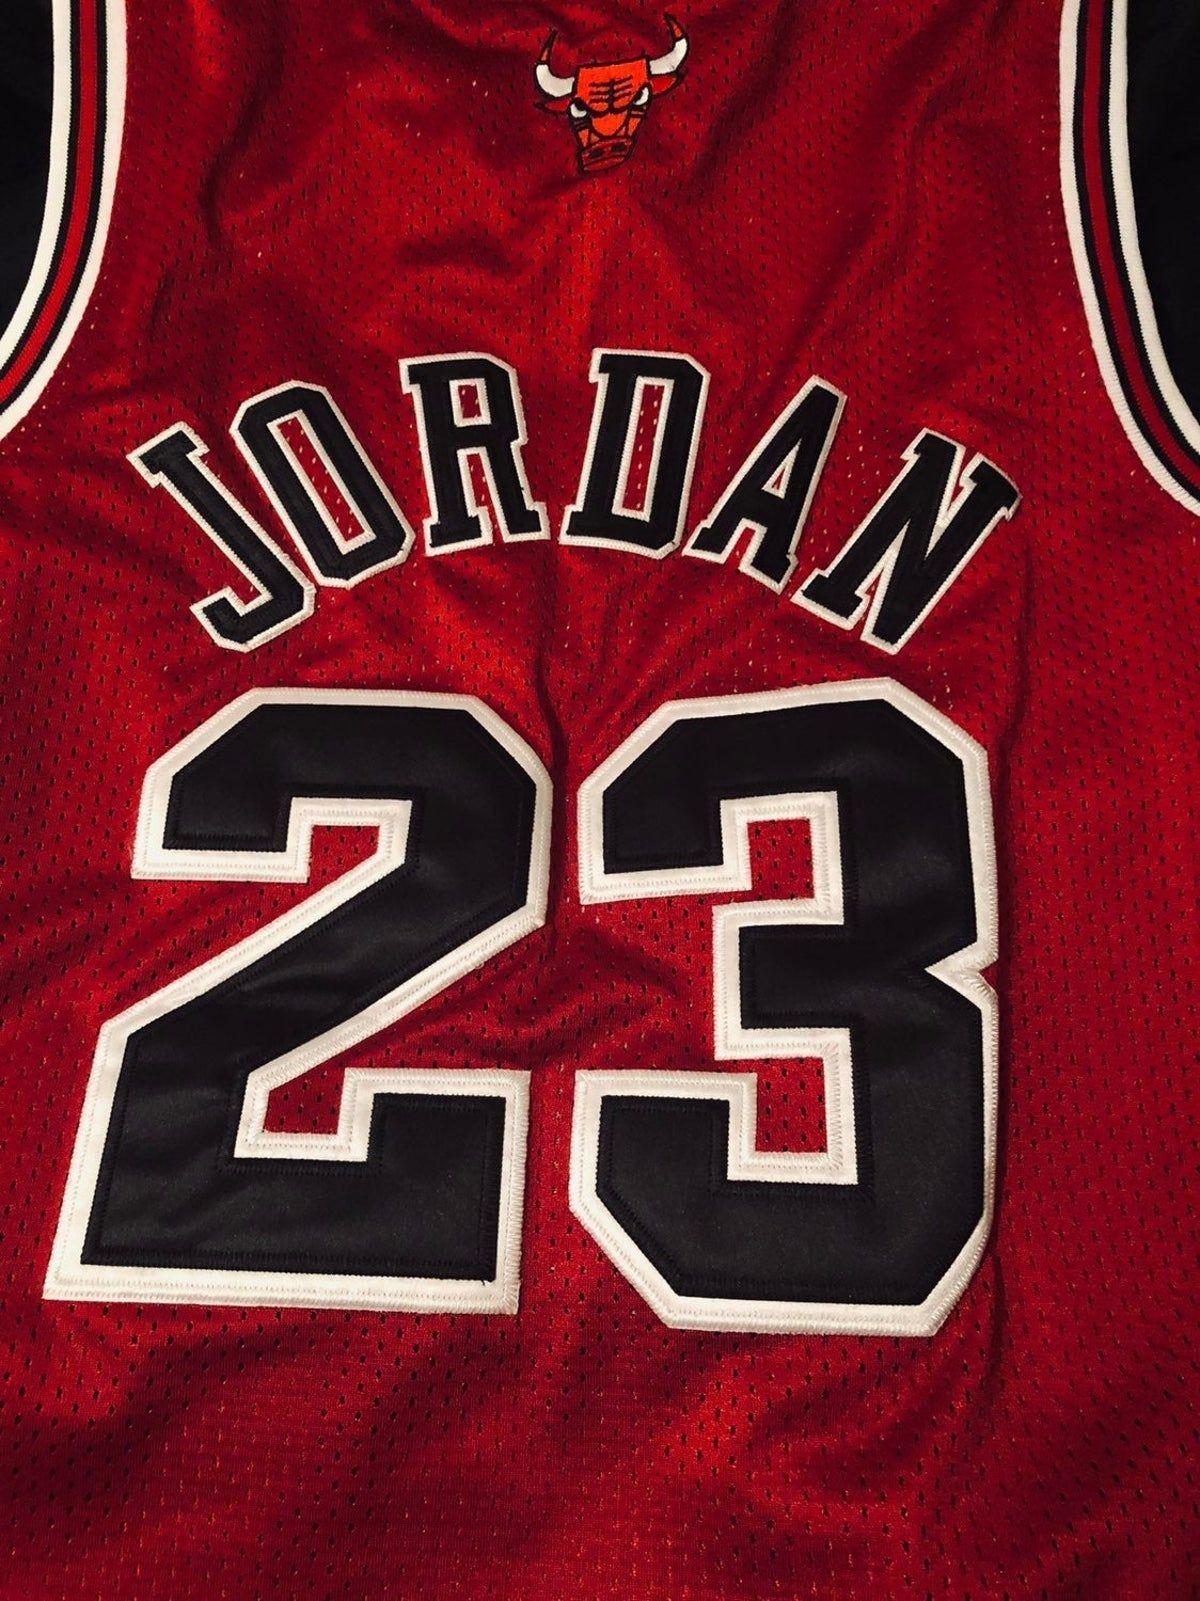 Michael Jordan Jersey Wallpapers - Top 